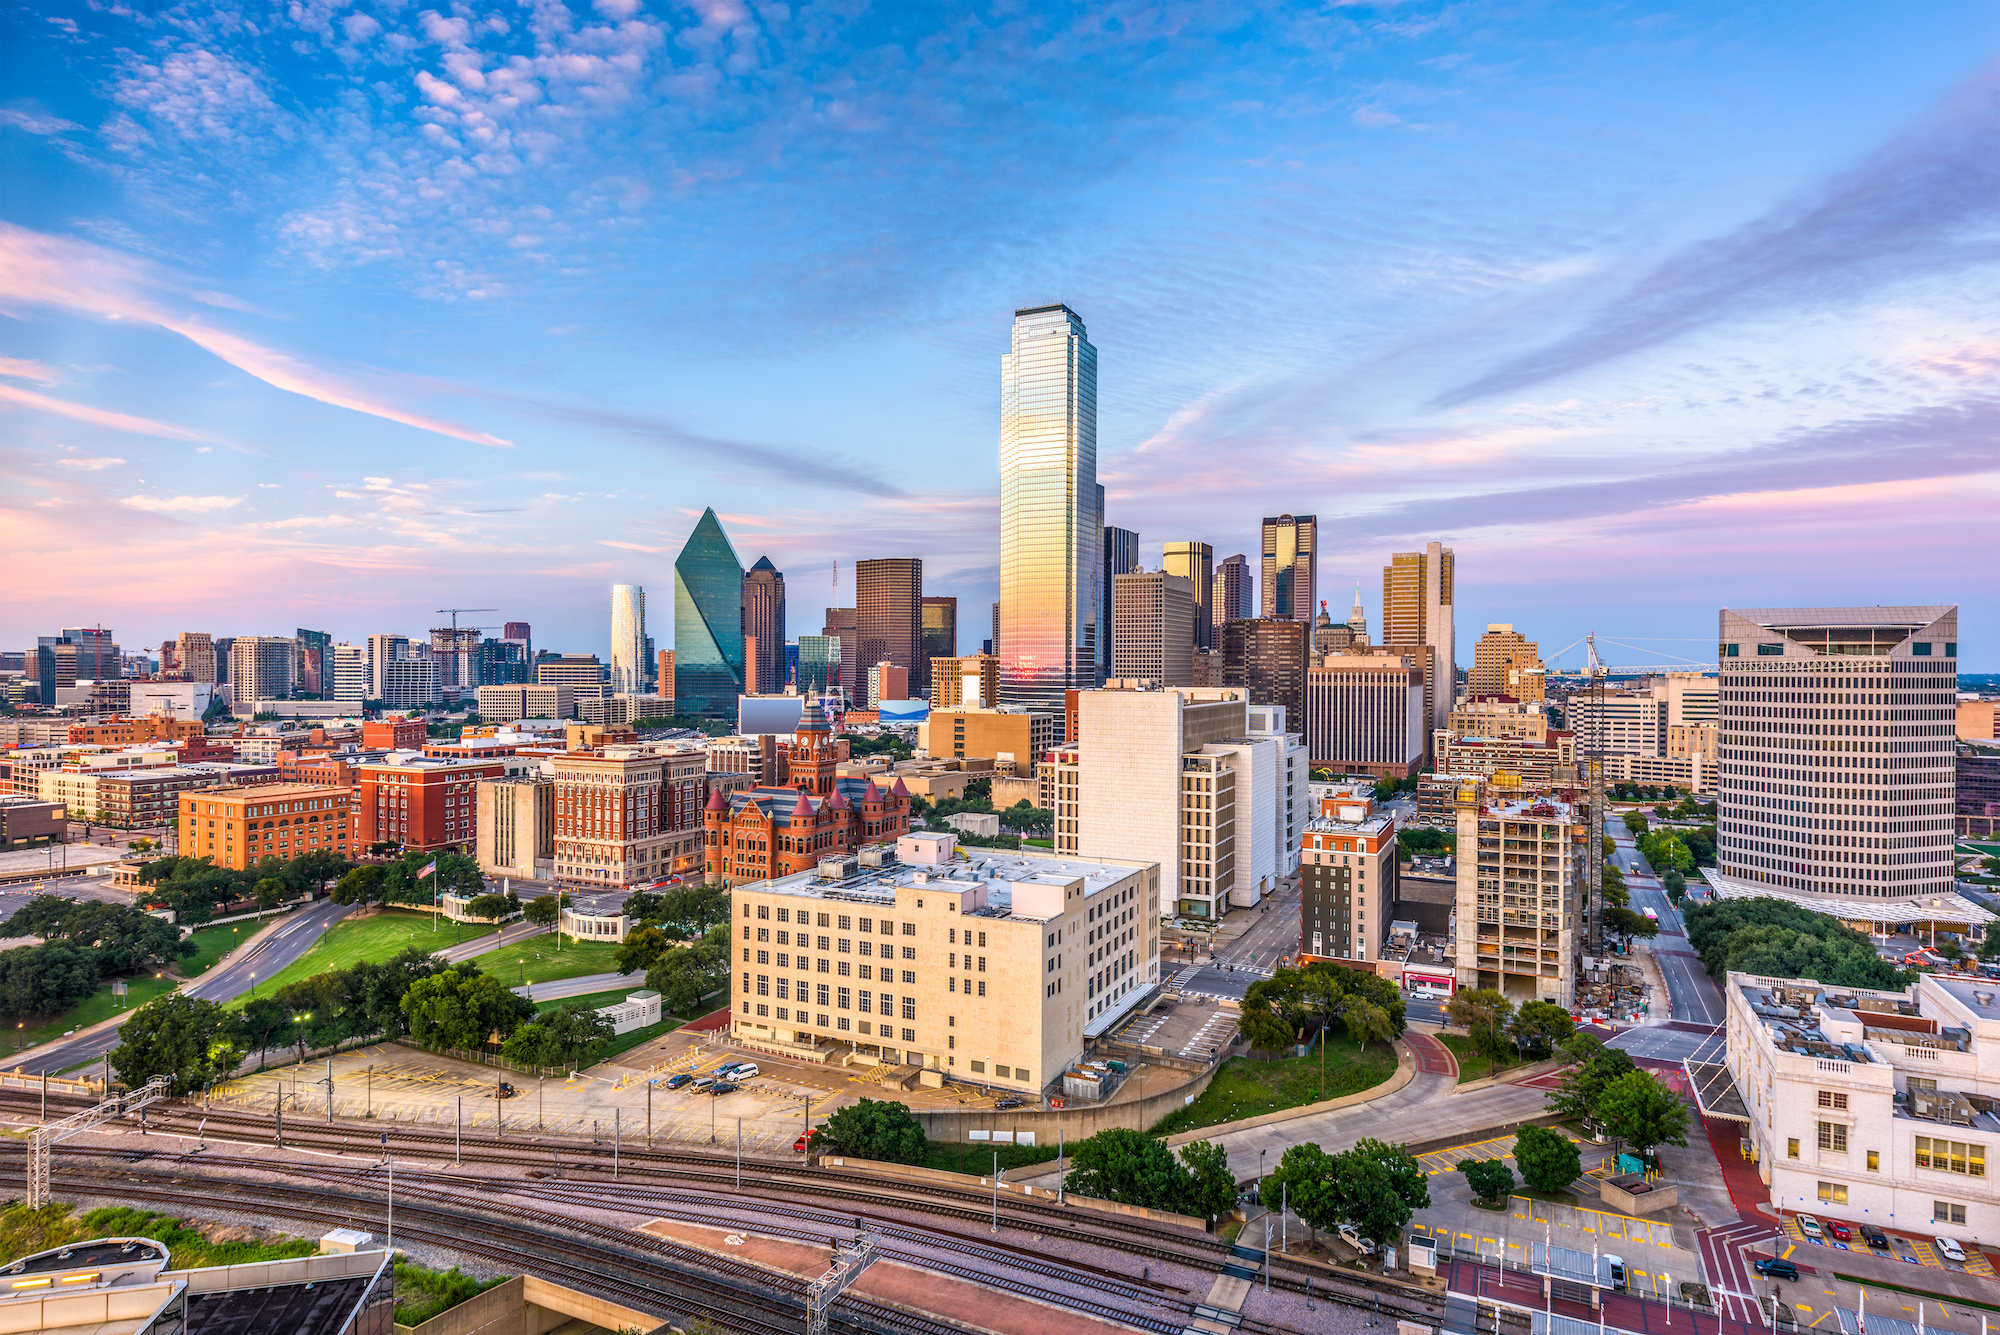 Cityscape view of downtown Dallas, Texas.